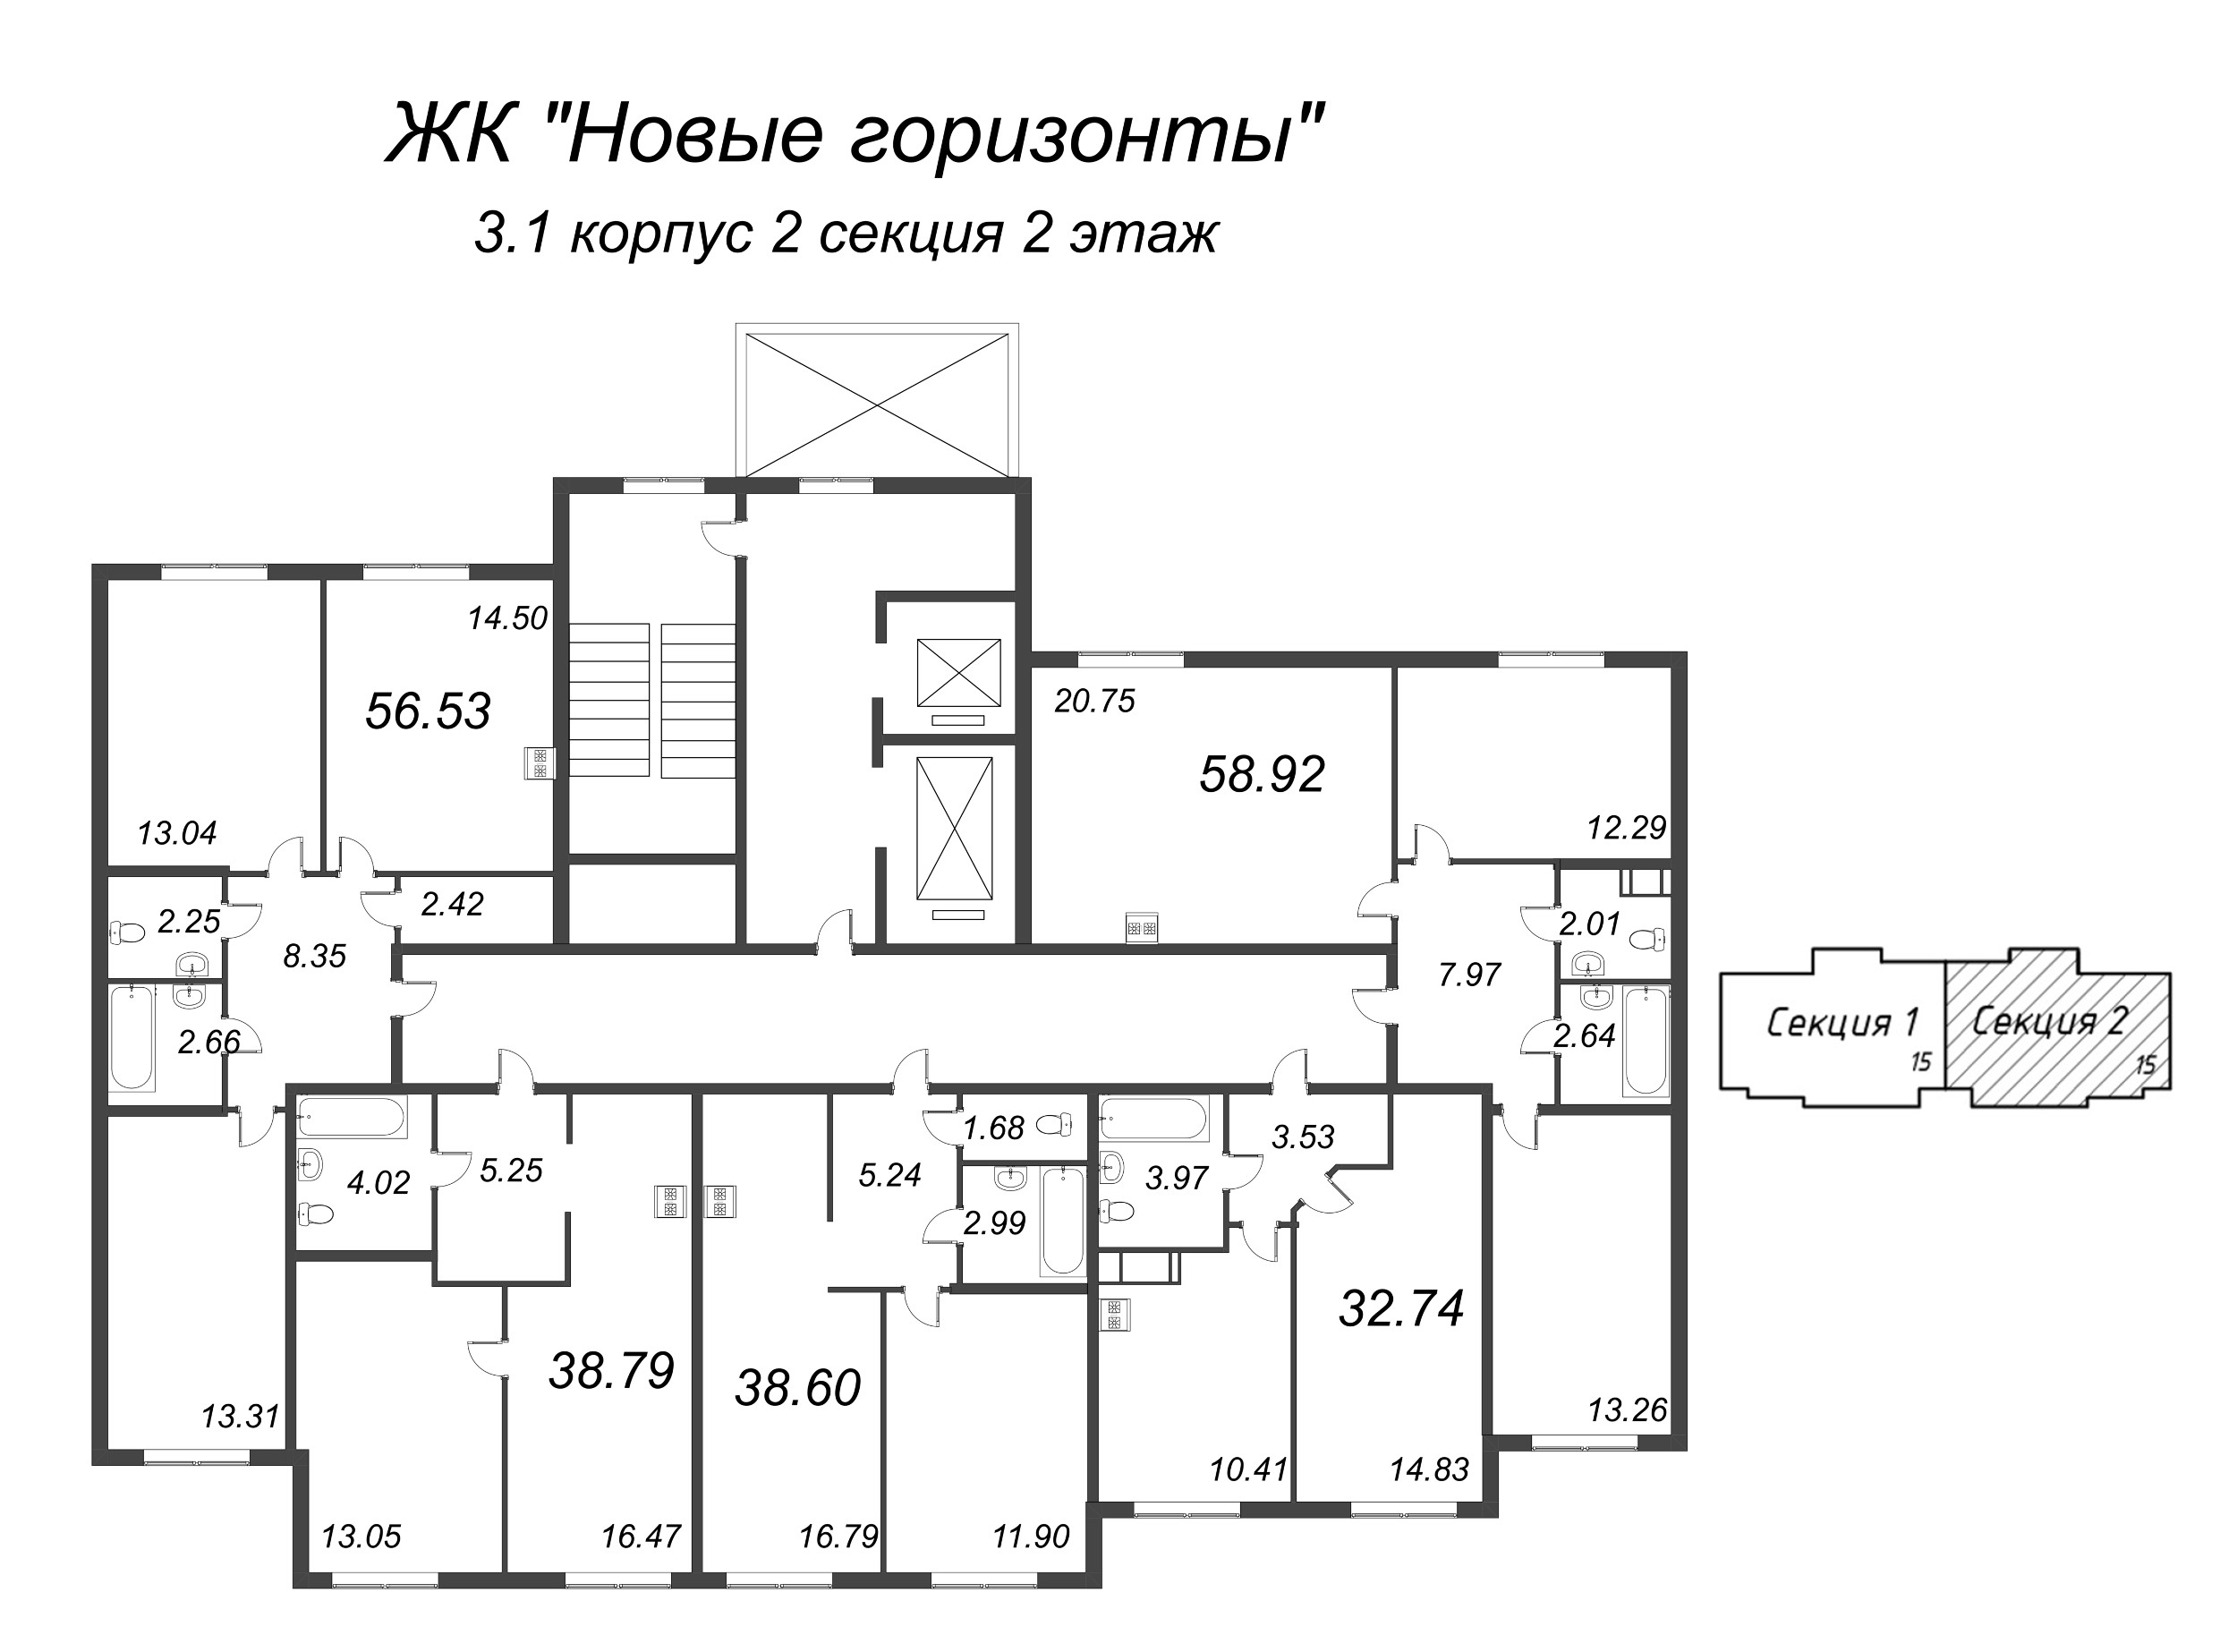 3-комнатная (Евро) квартира, 59.4 м² - планировка этажа